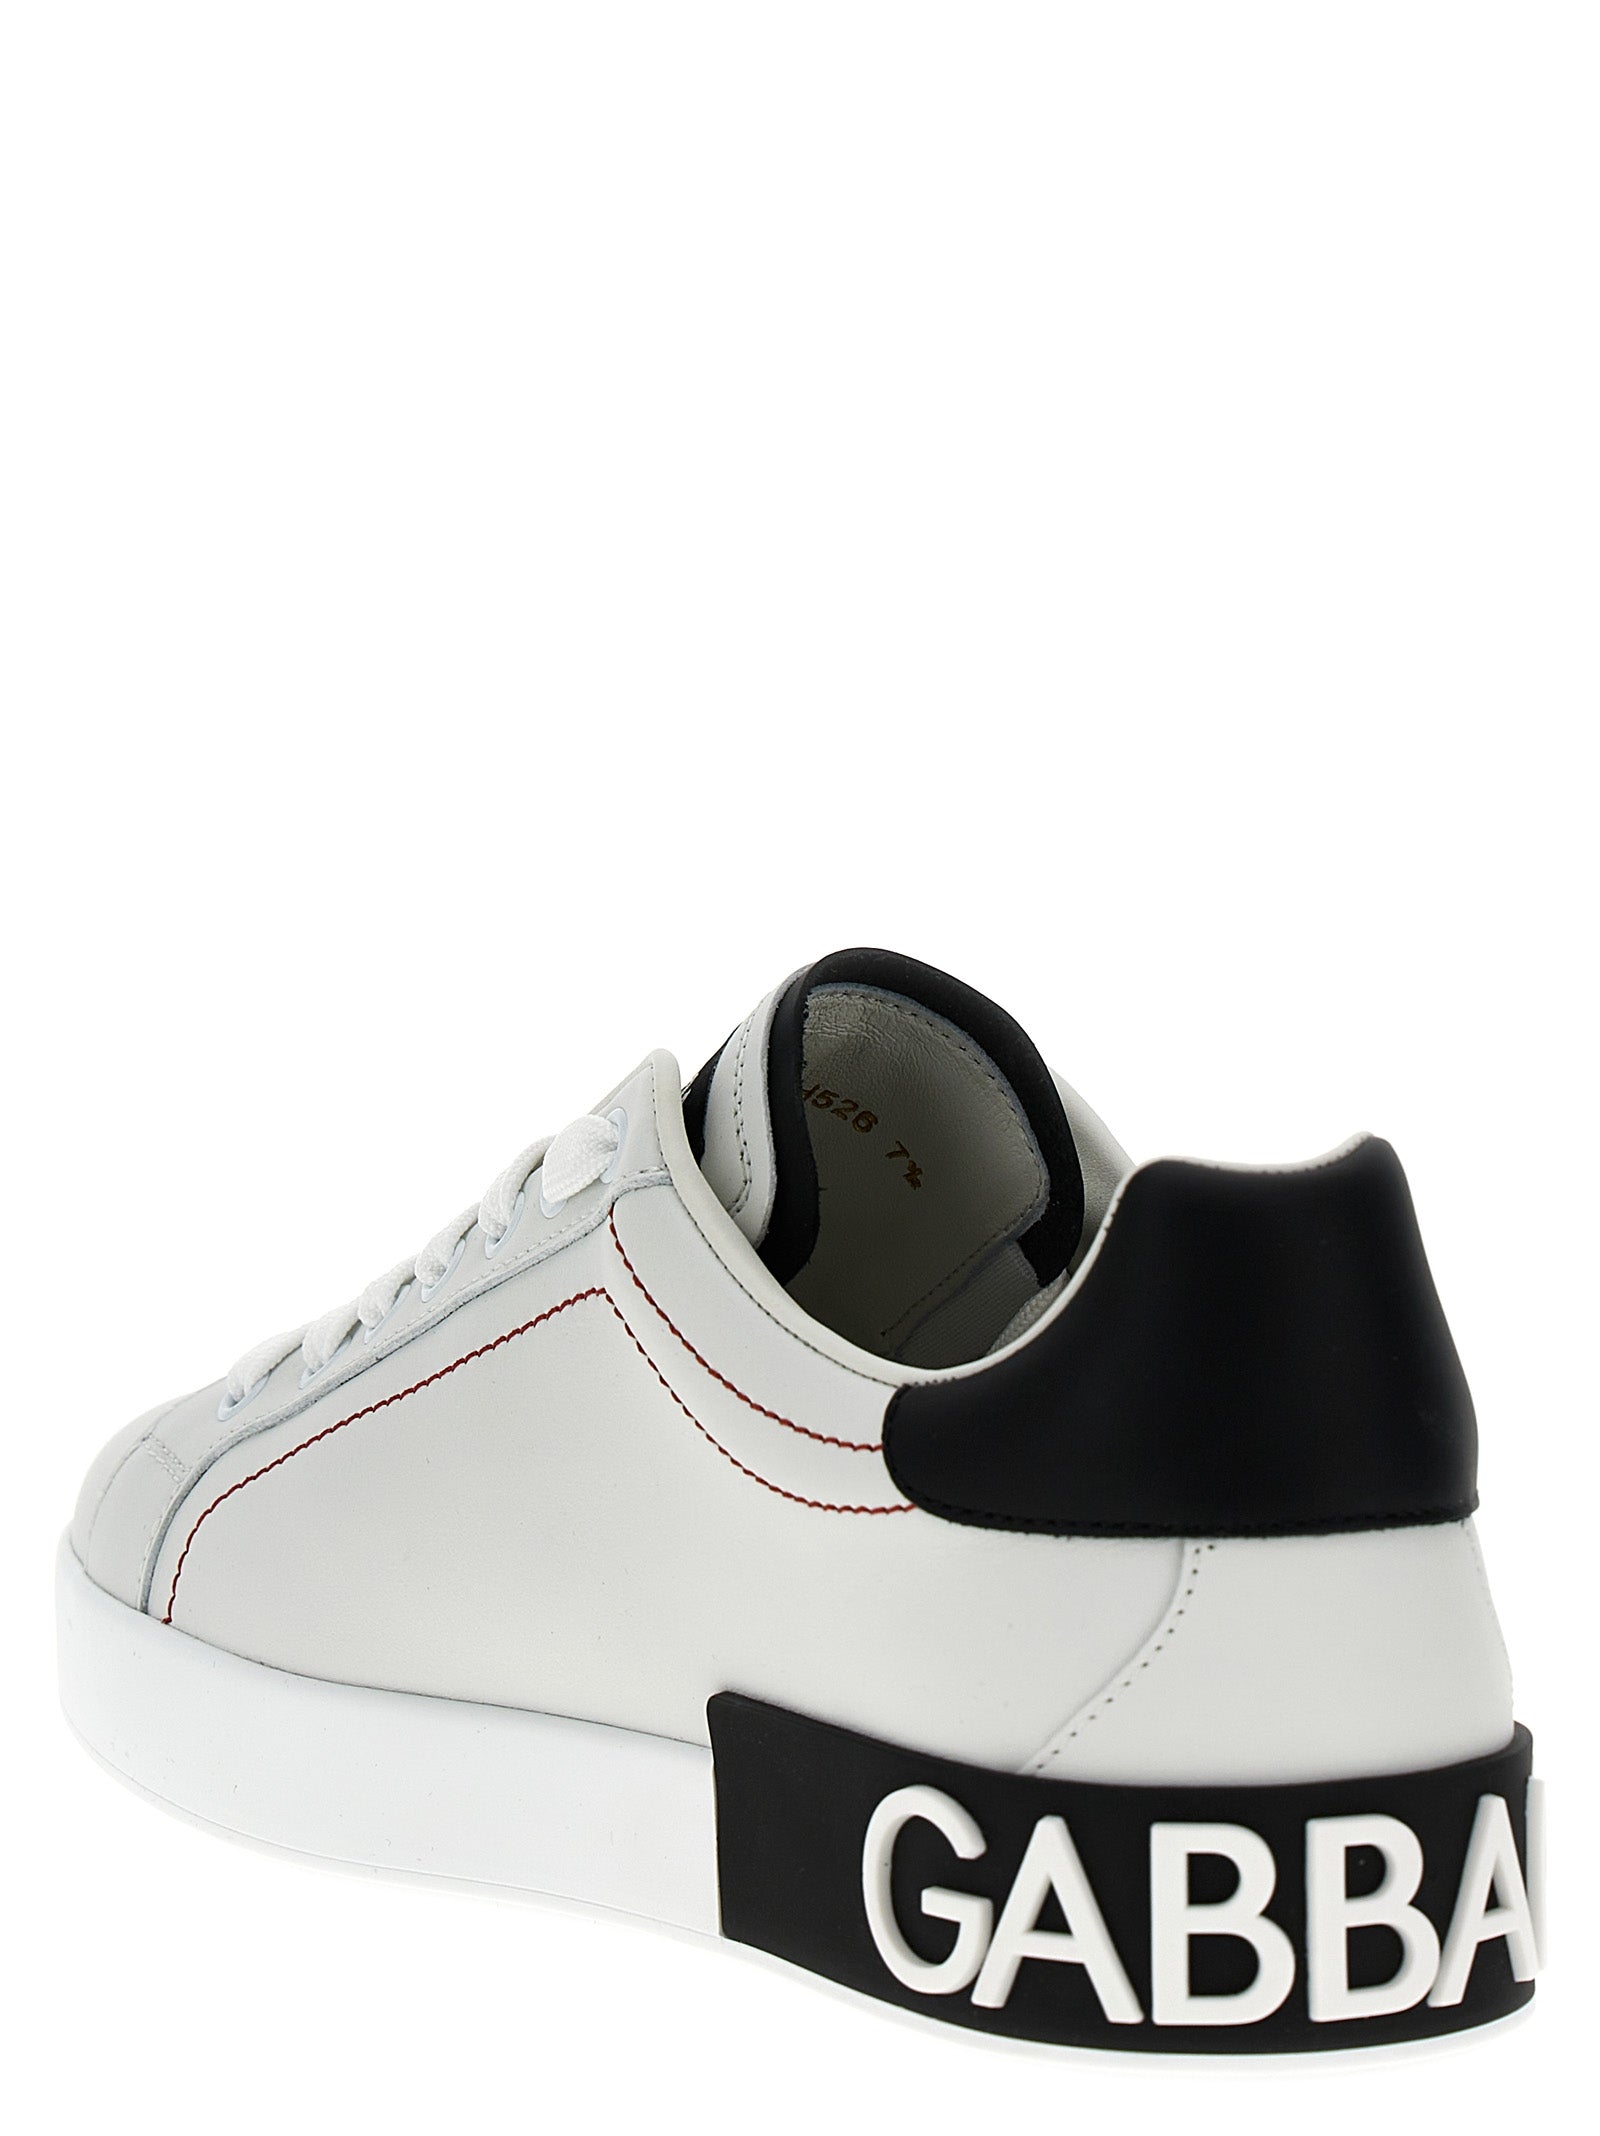 Portofino Sneakers White/Black